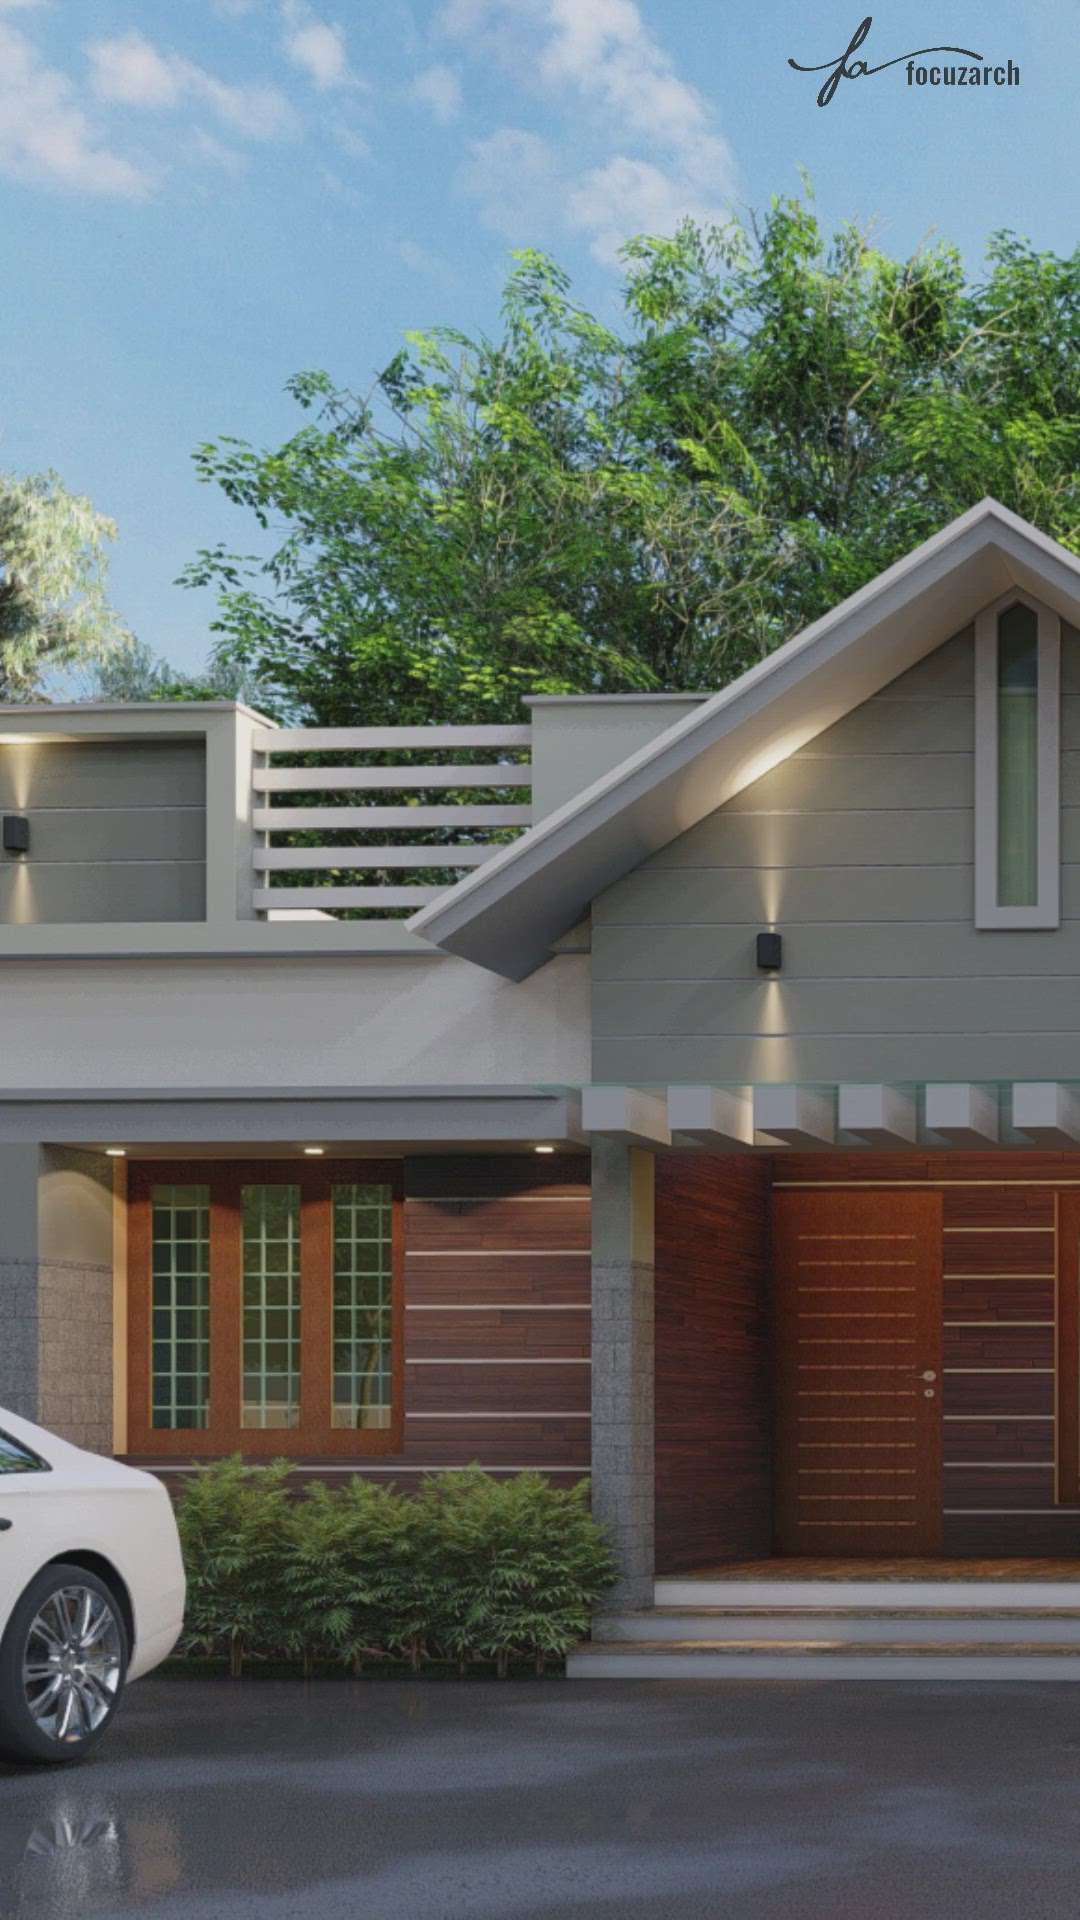 Kerala home design ❤️😍